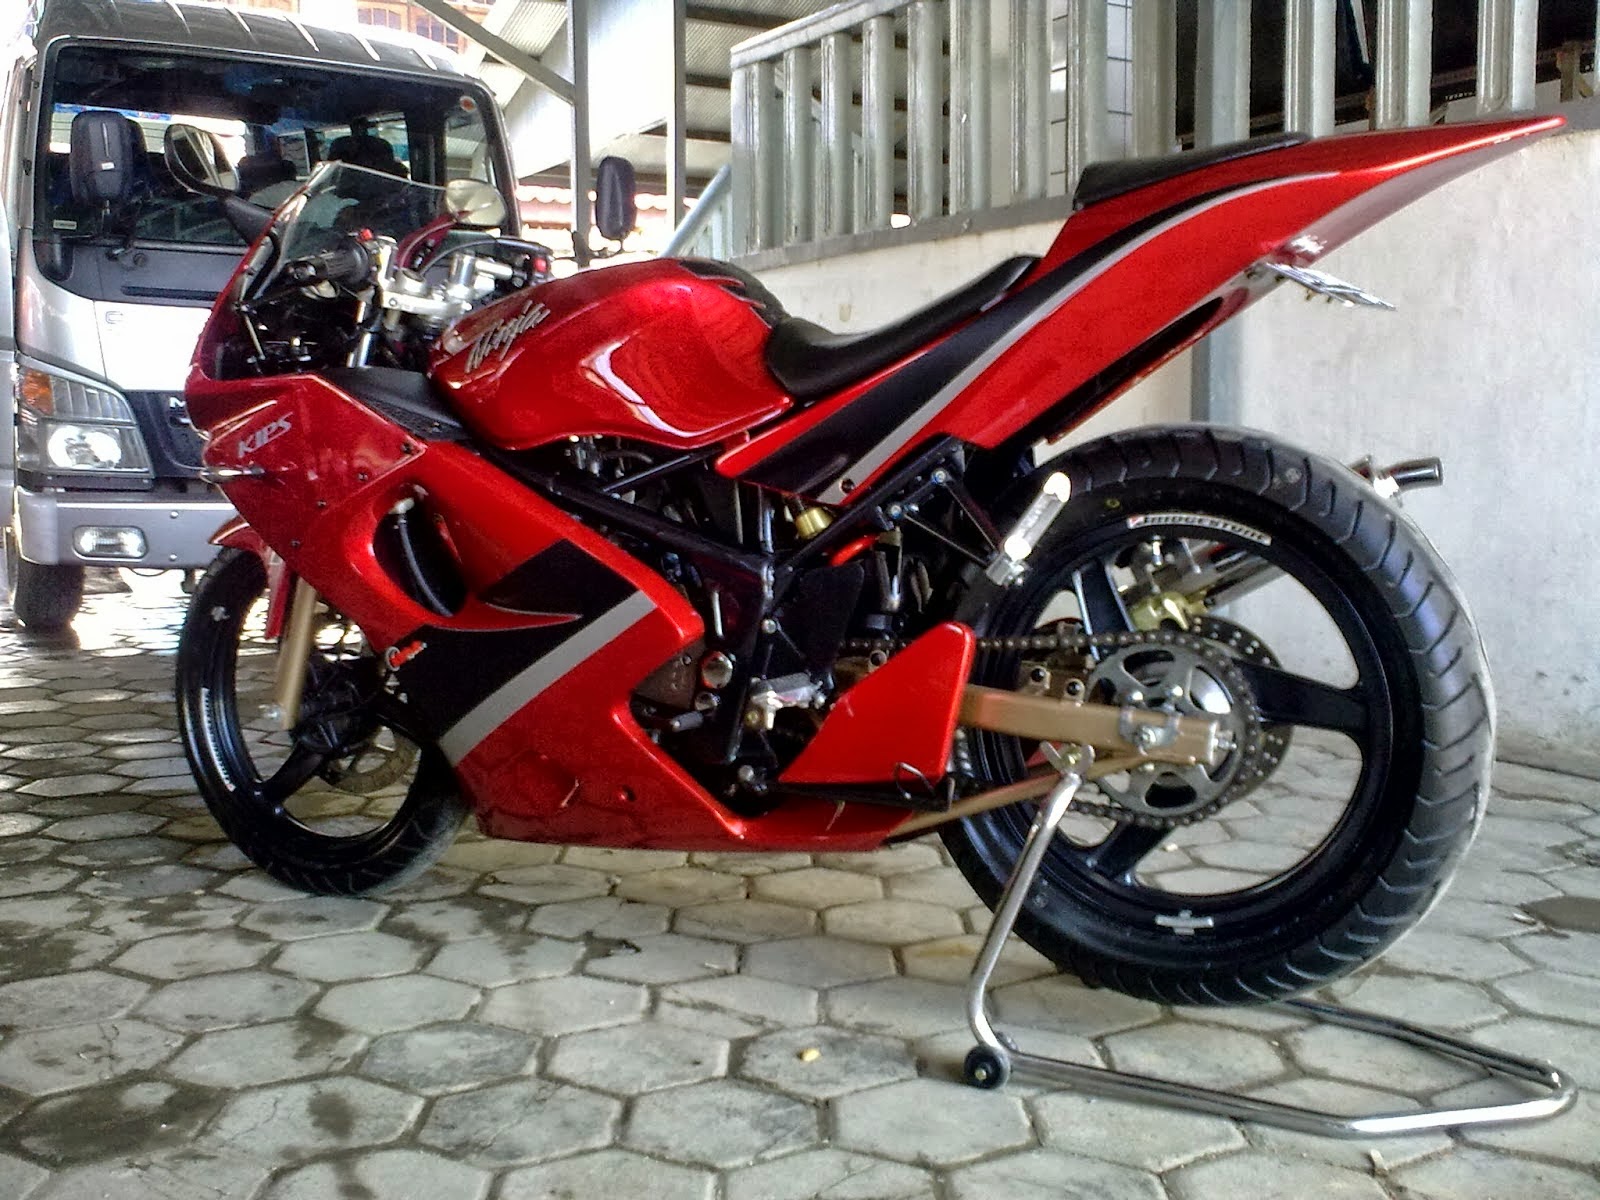 Modifikasi Motor Kawasaki Ninja Versi Superbike | Juliana ...